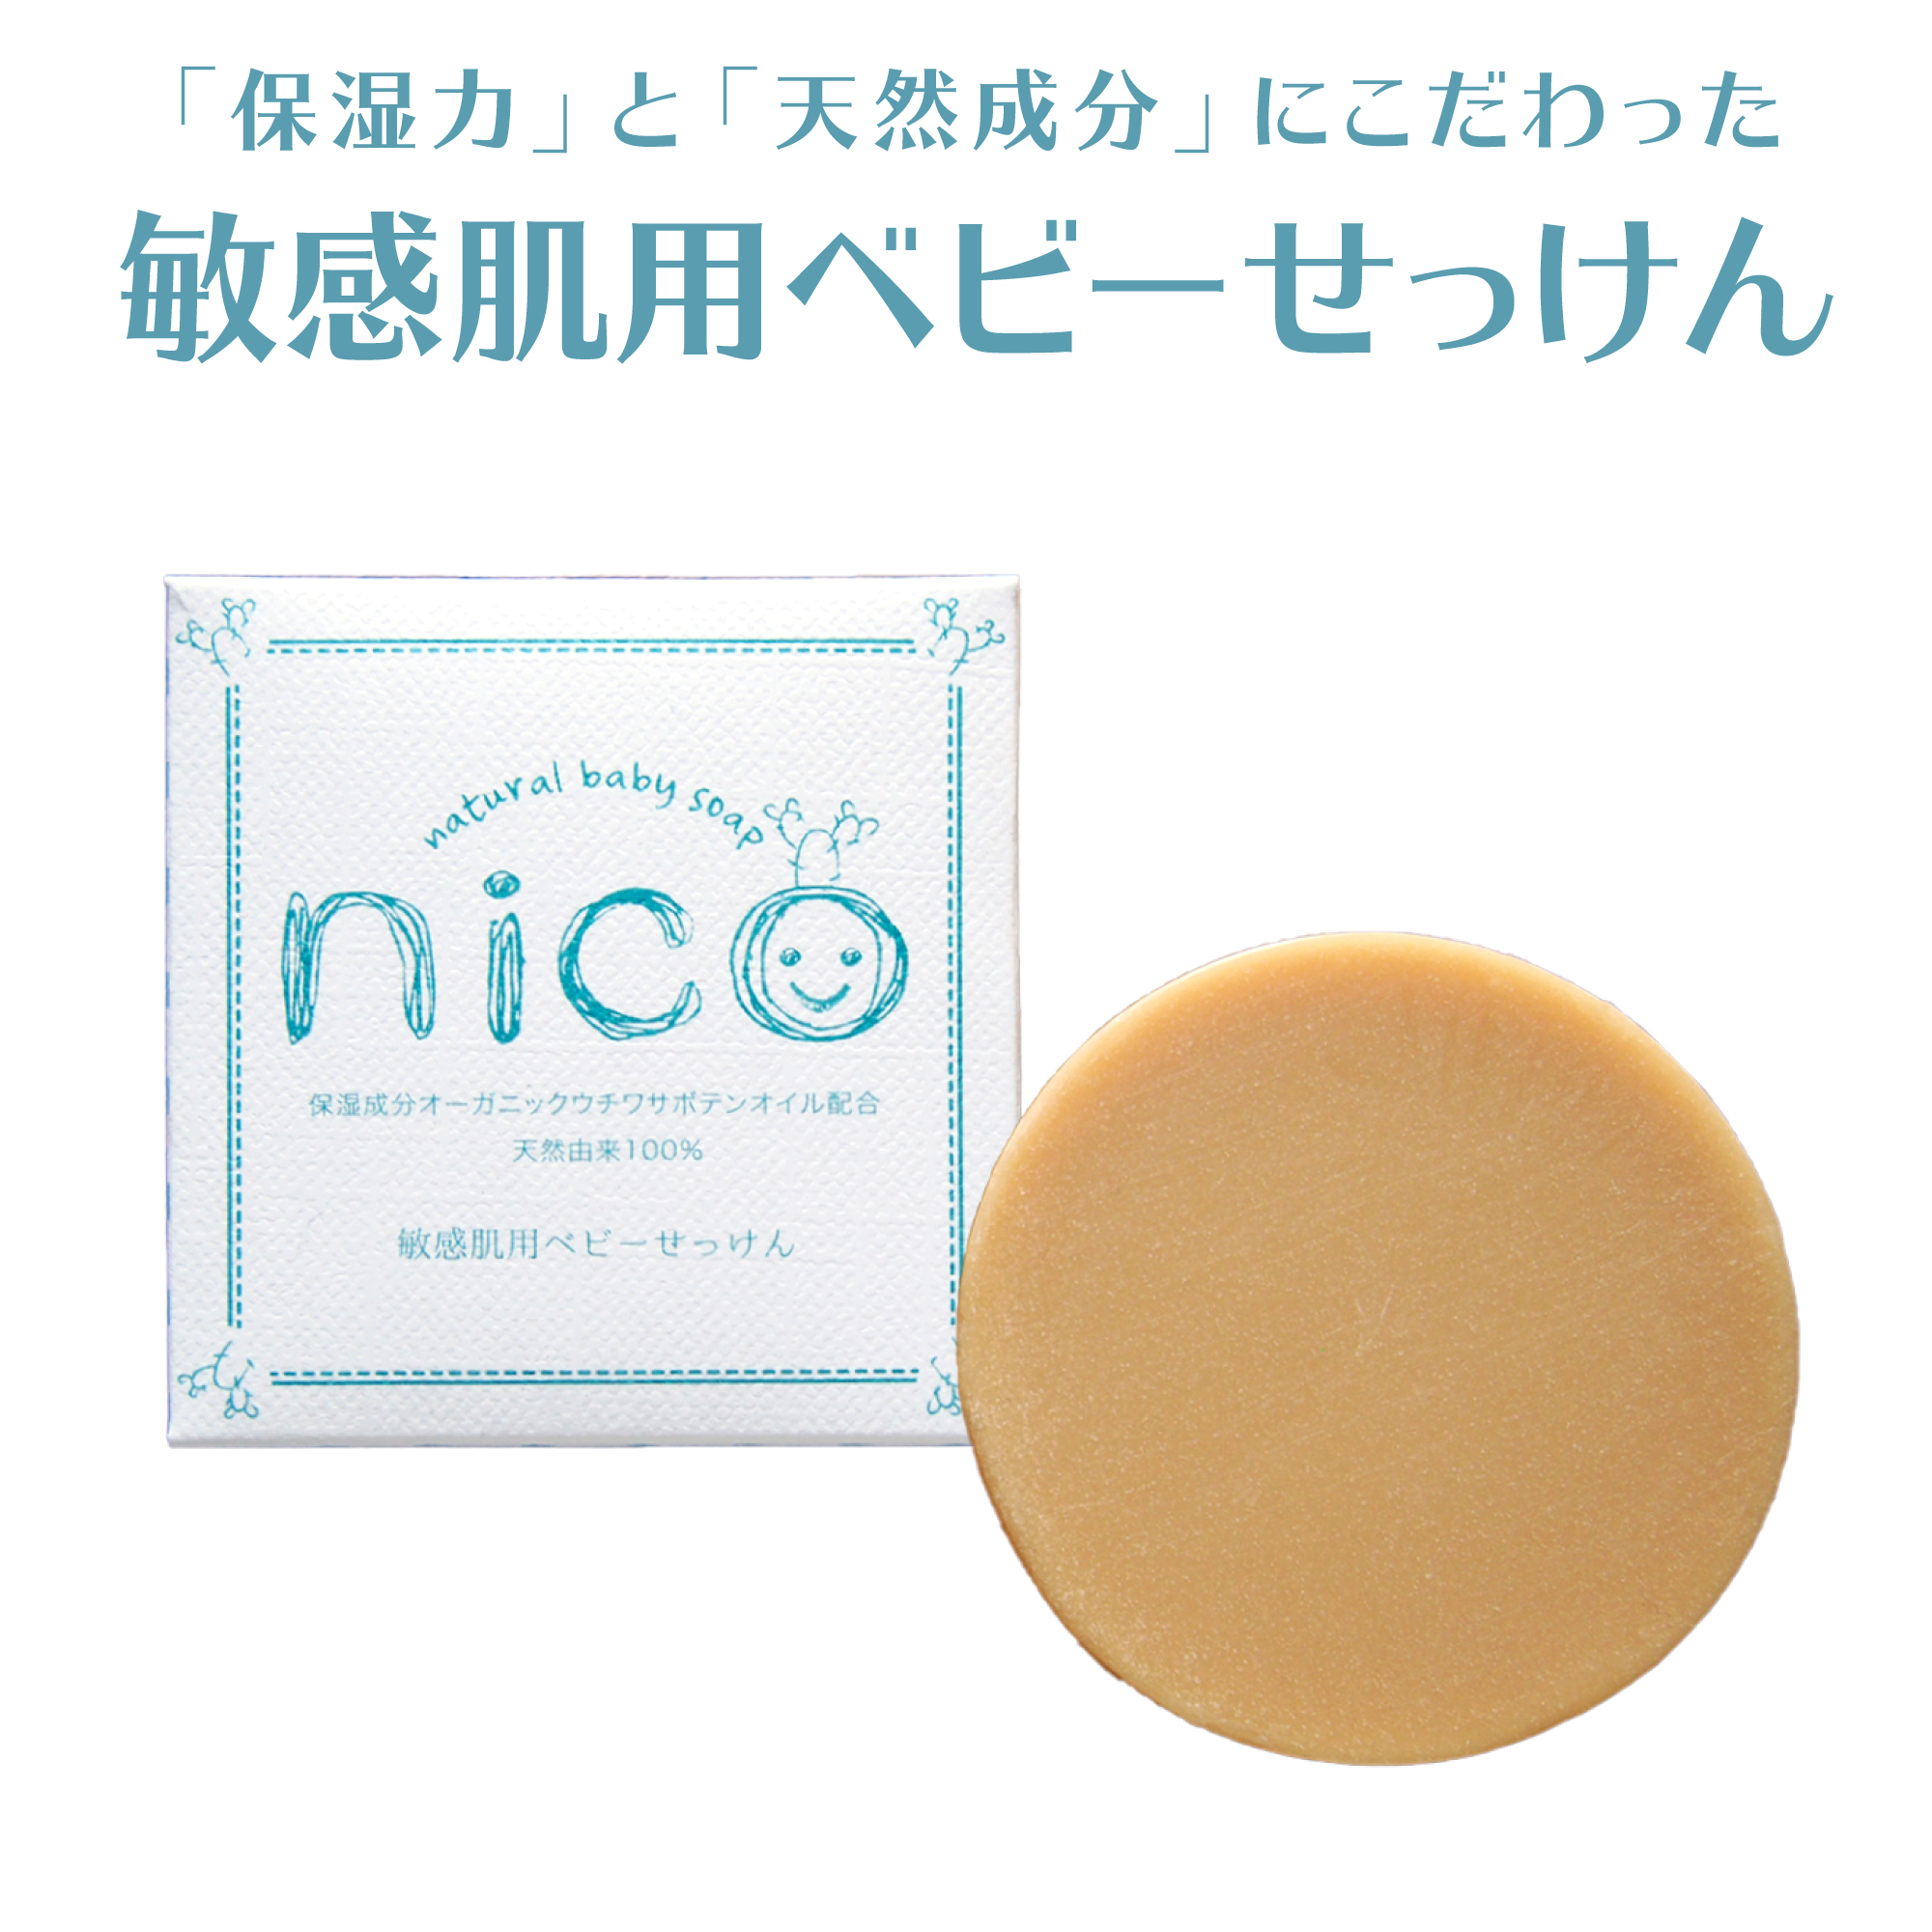 nico石鹸 | www.mdh.com.sa